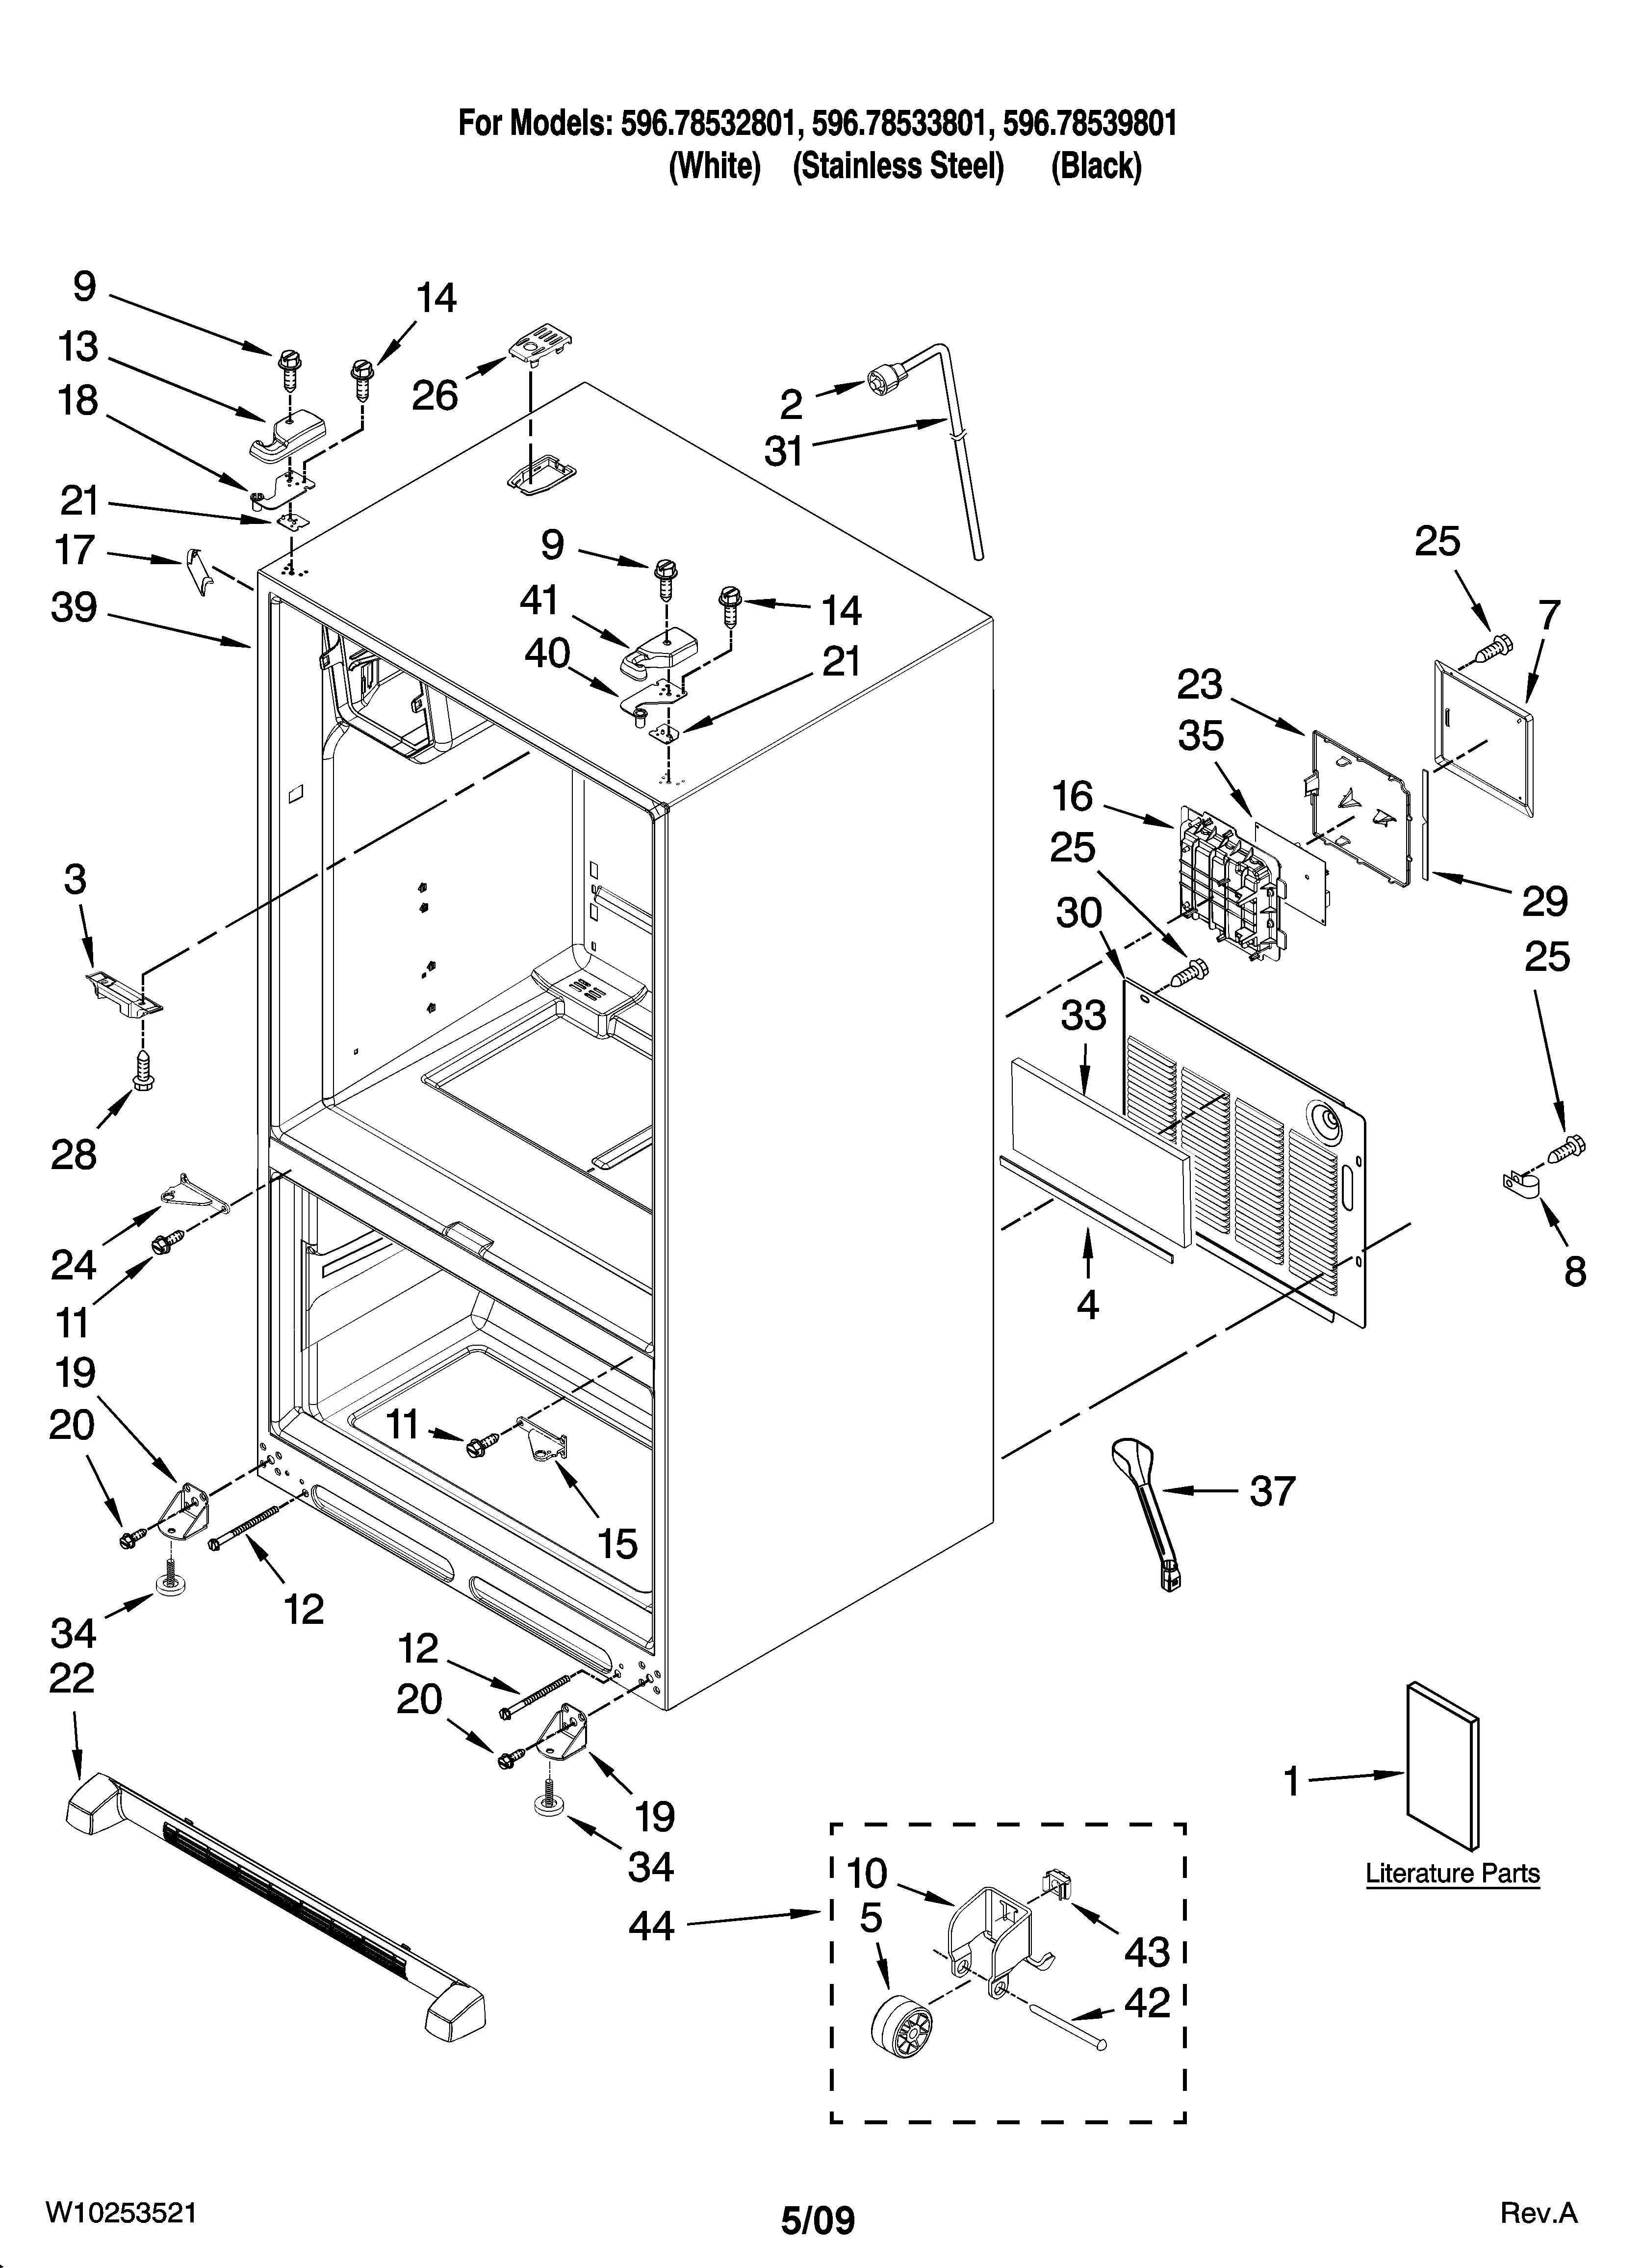 [DIAGRAM] Wiring Diagram For Kenmore Elite Refrigerator - MYDIAGRAM.ONLINE